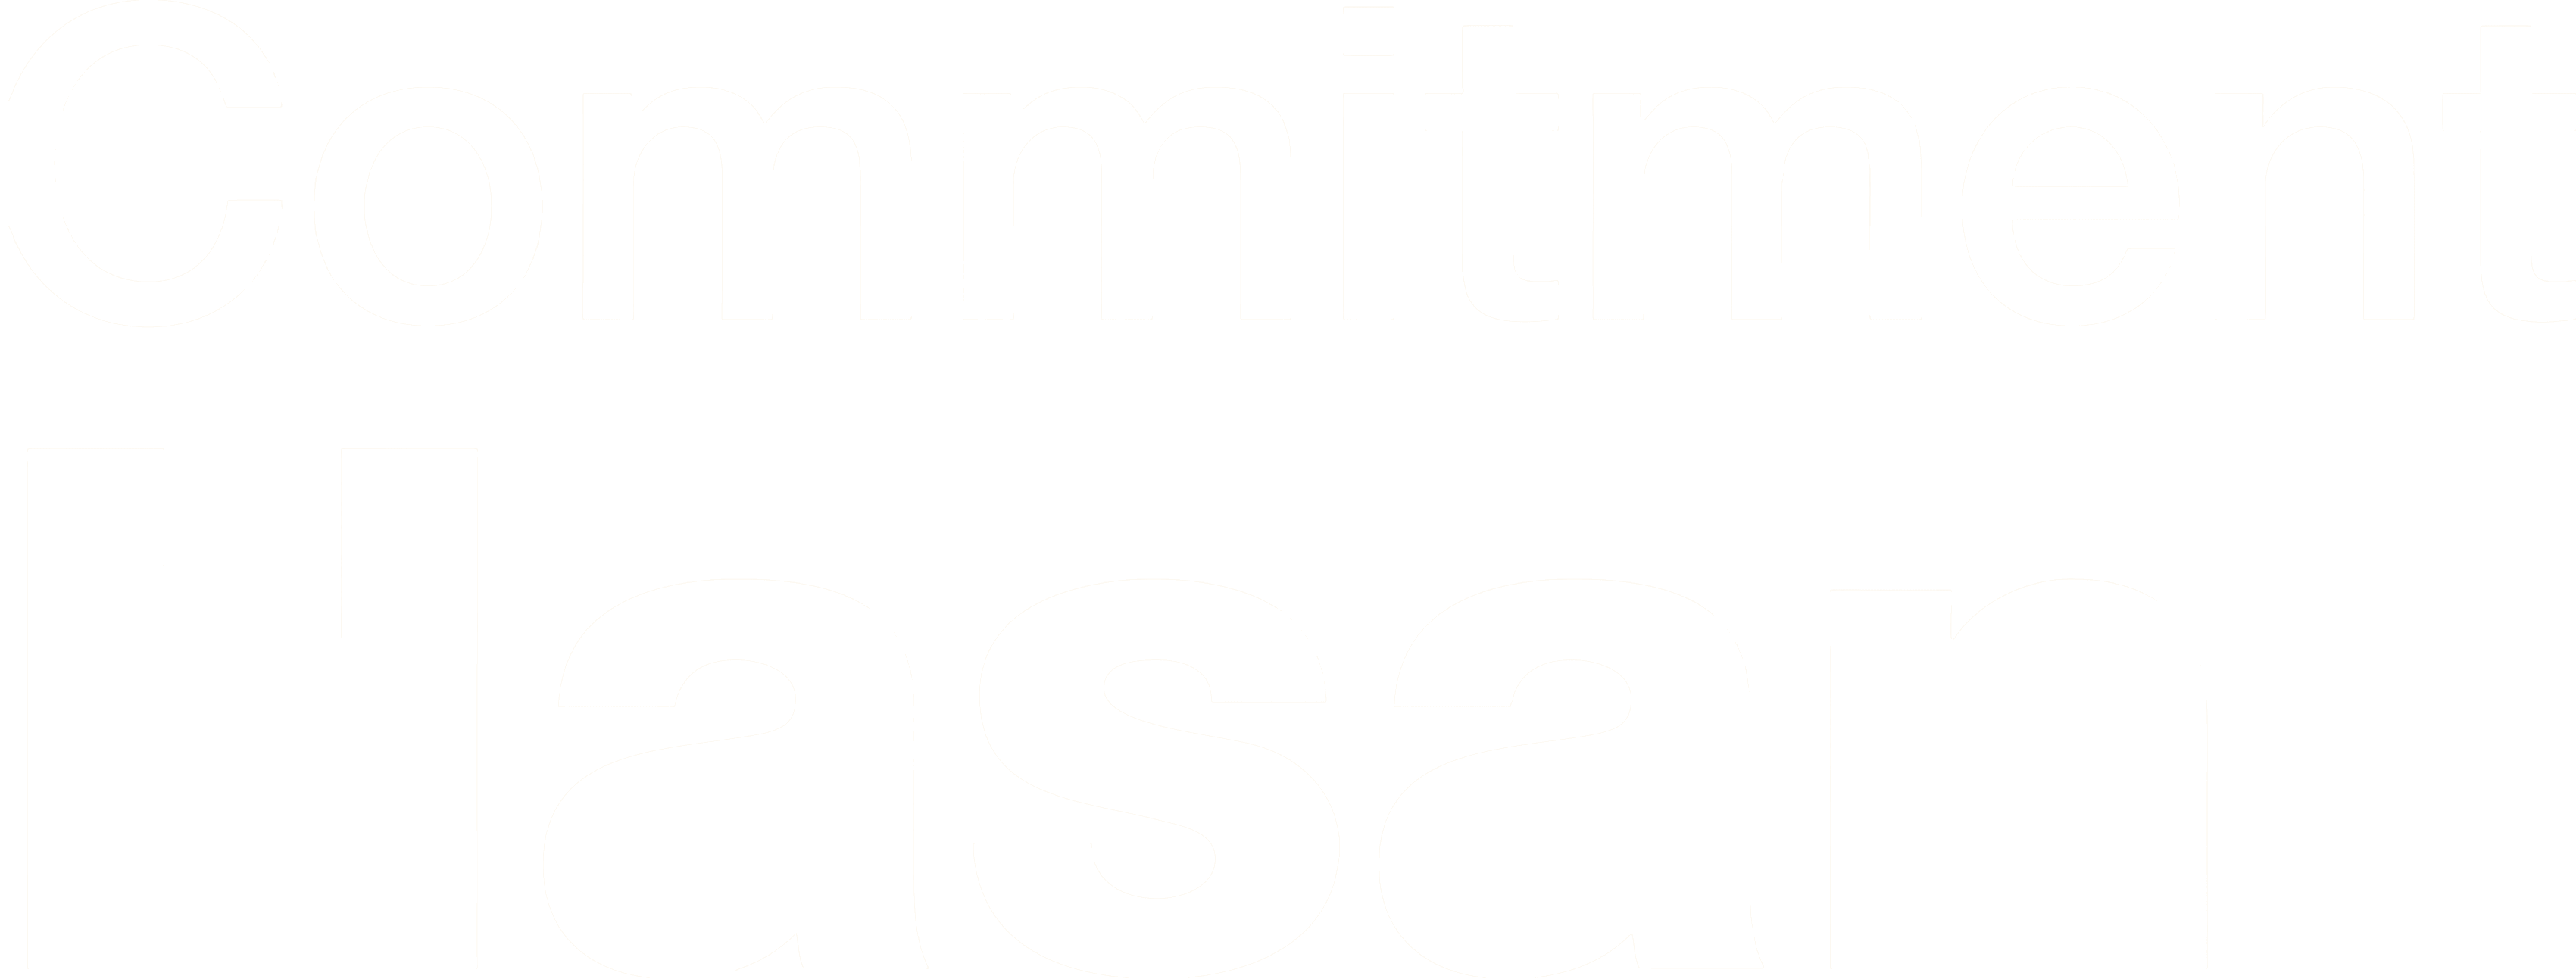 Commitment Hasan logo